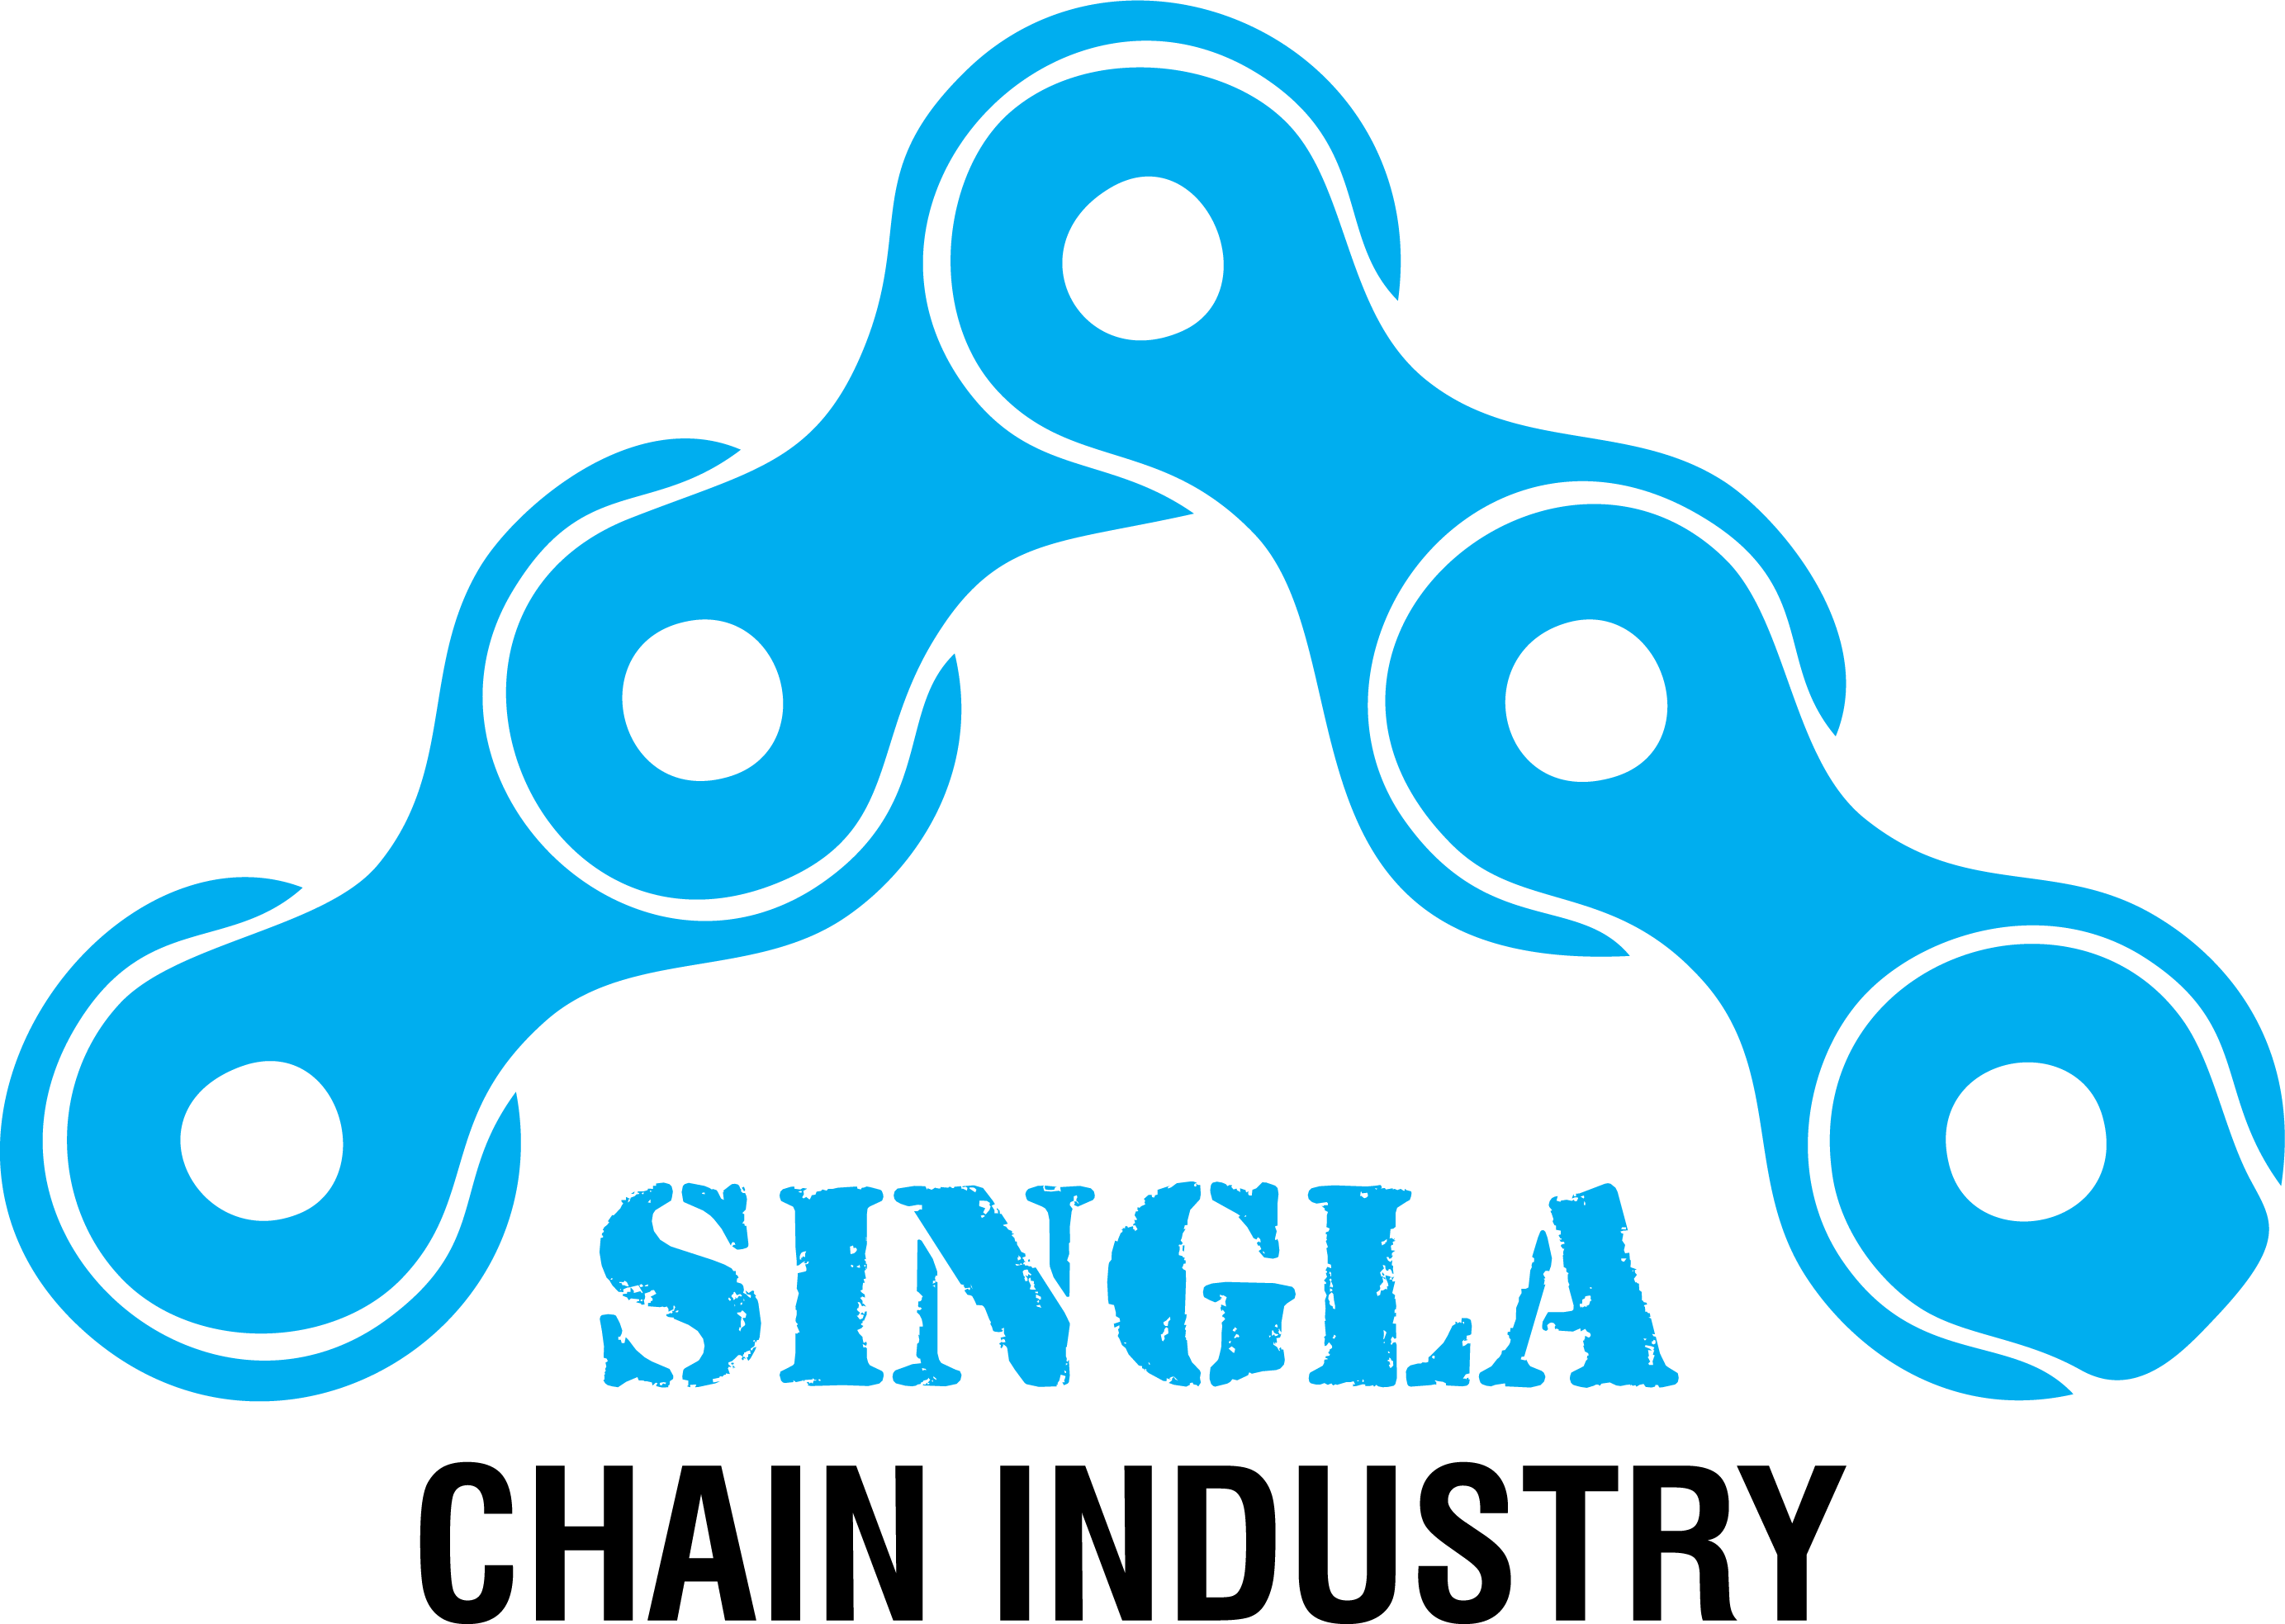 Copy of SINGLA CHAIN